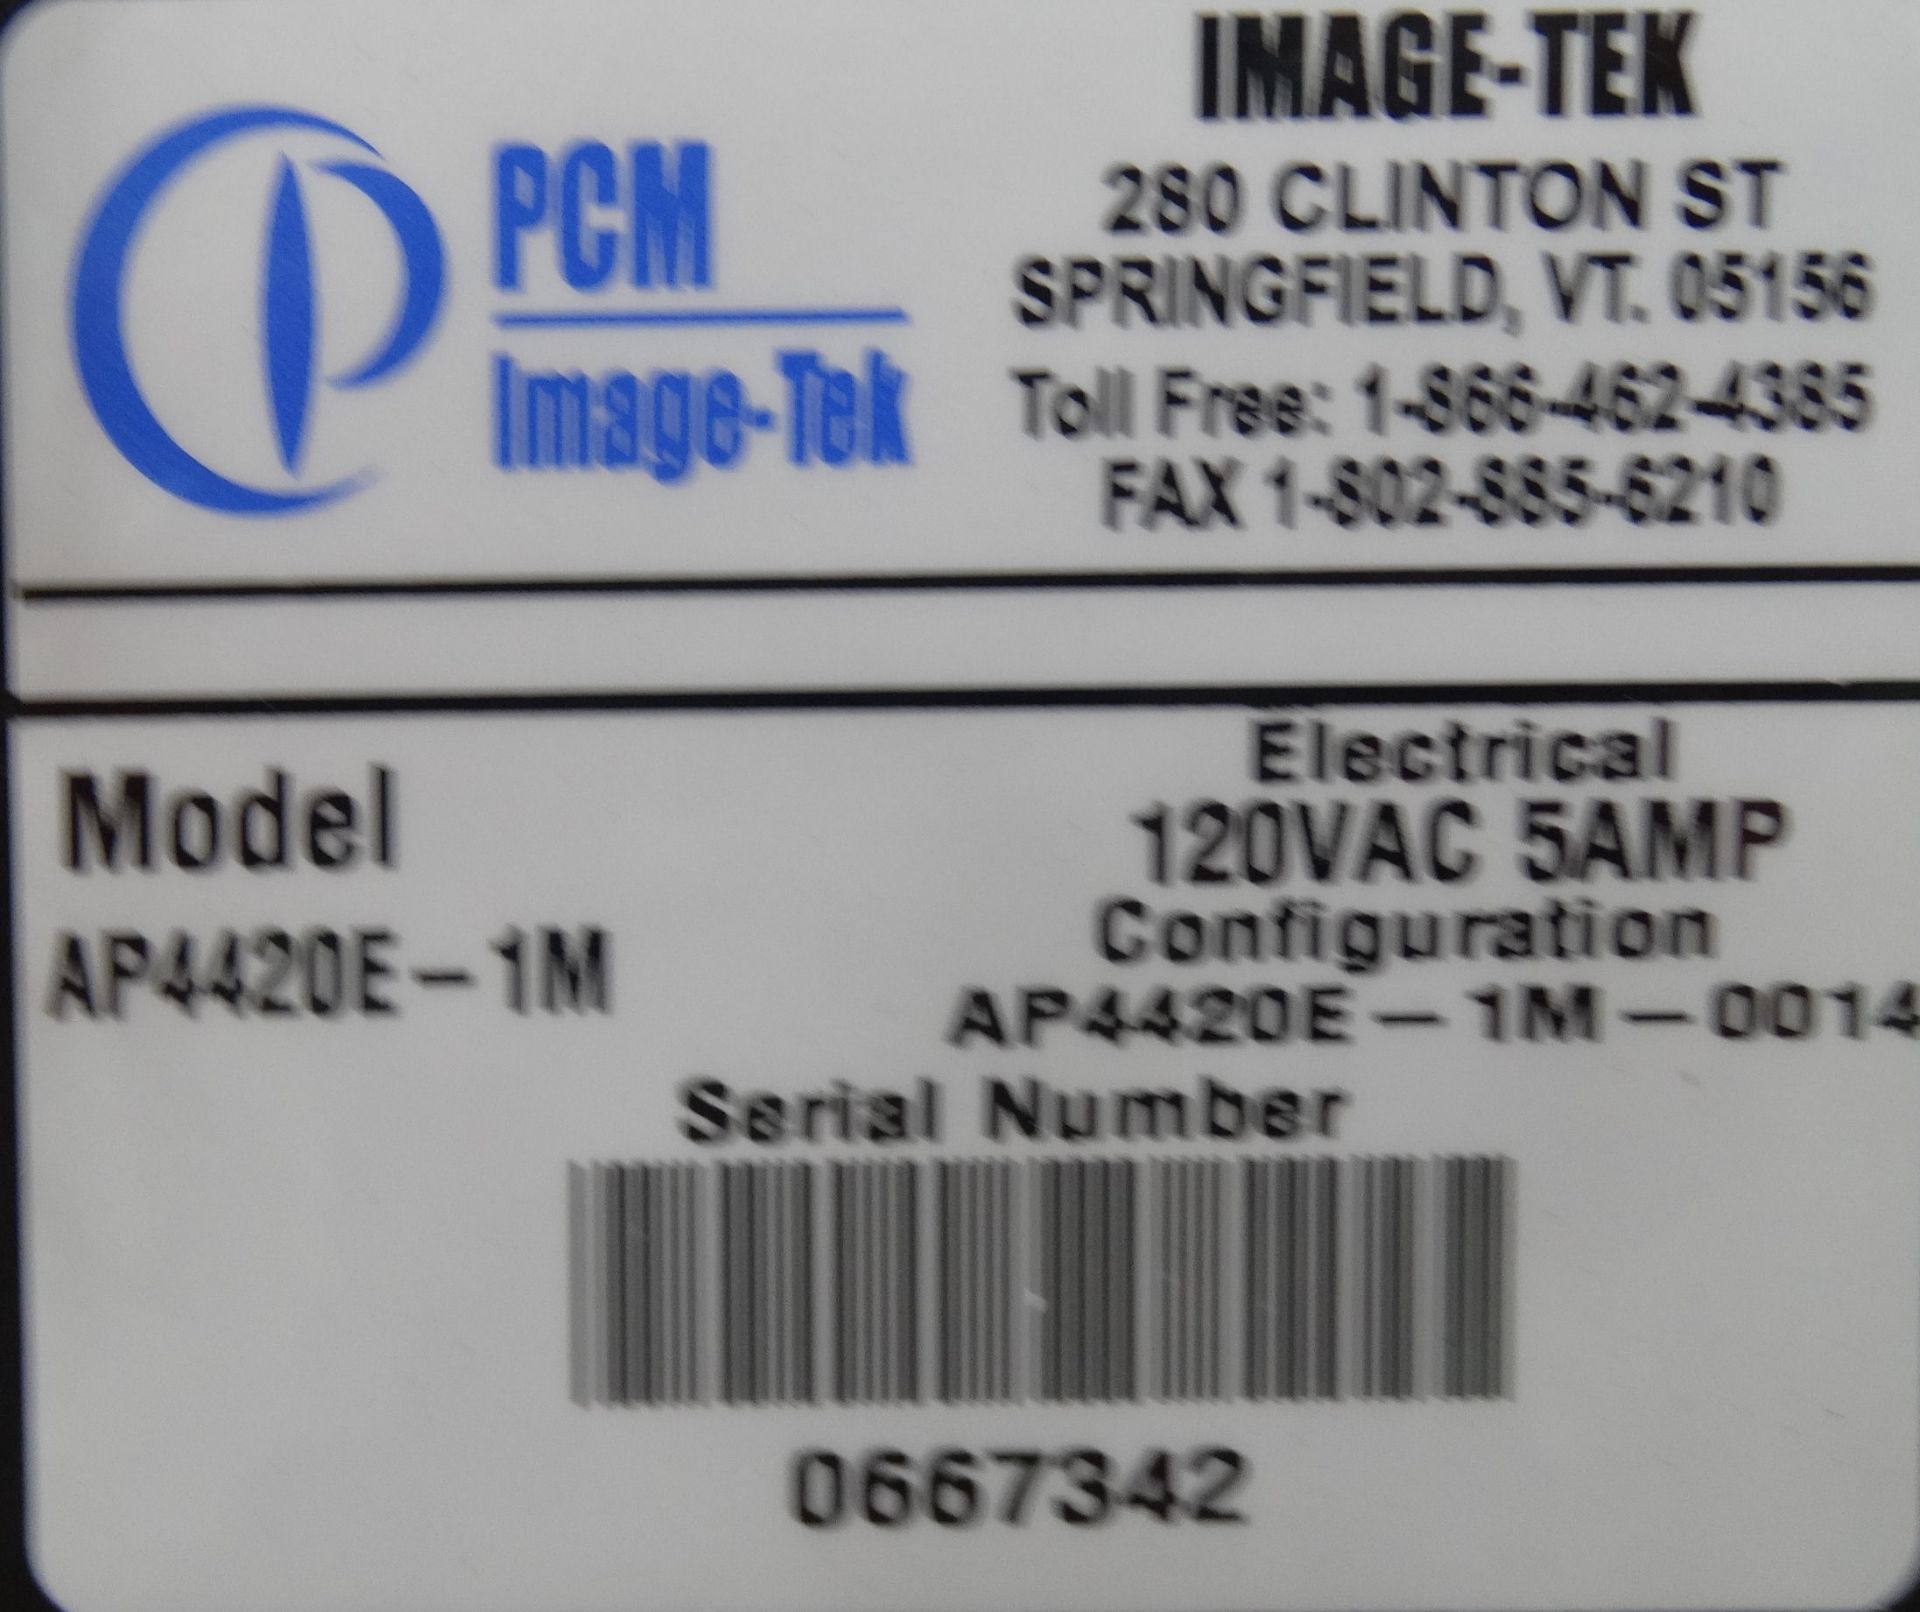 PCM ImageTek AP4420E Print and Apply Labeler B5159 - Image 12 of 12